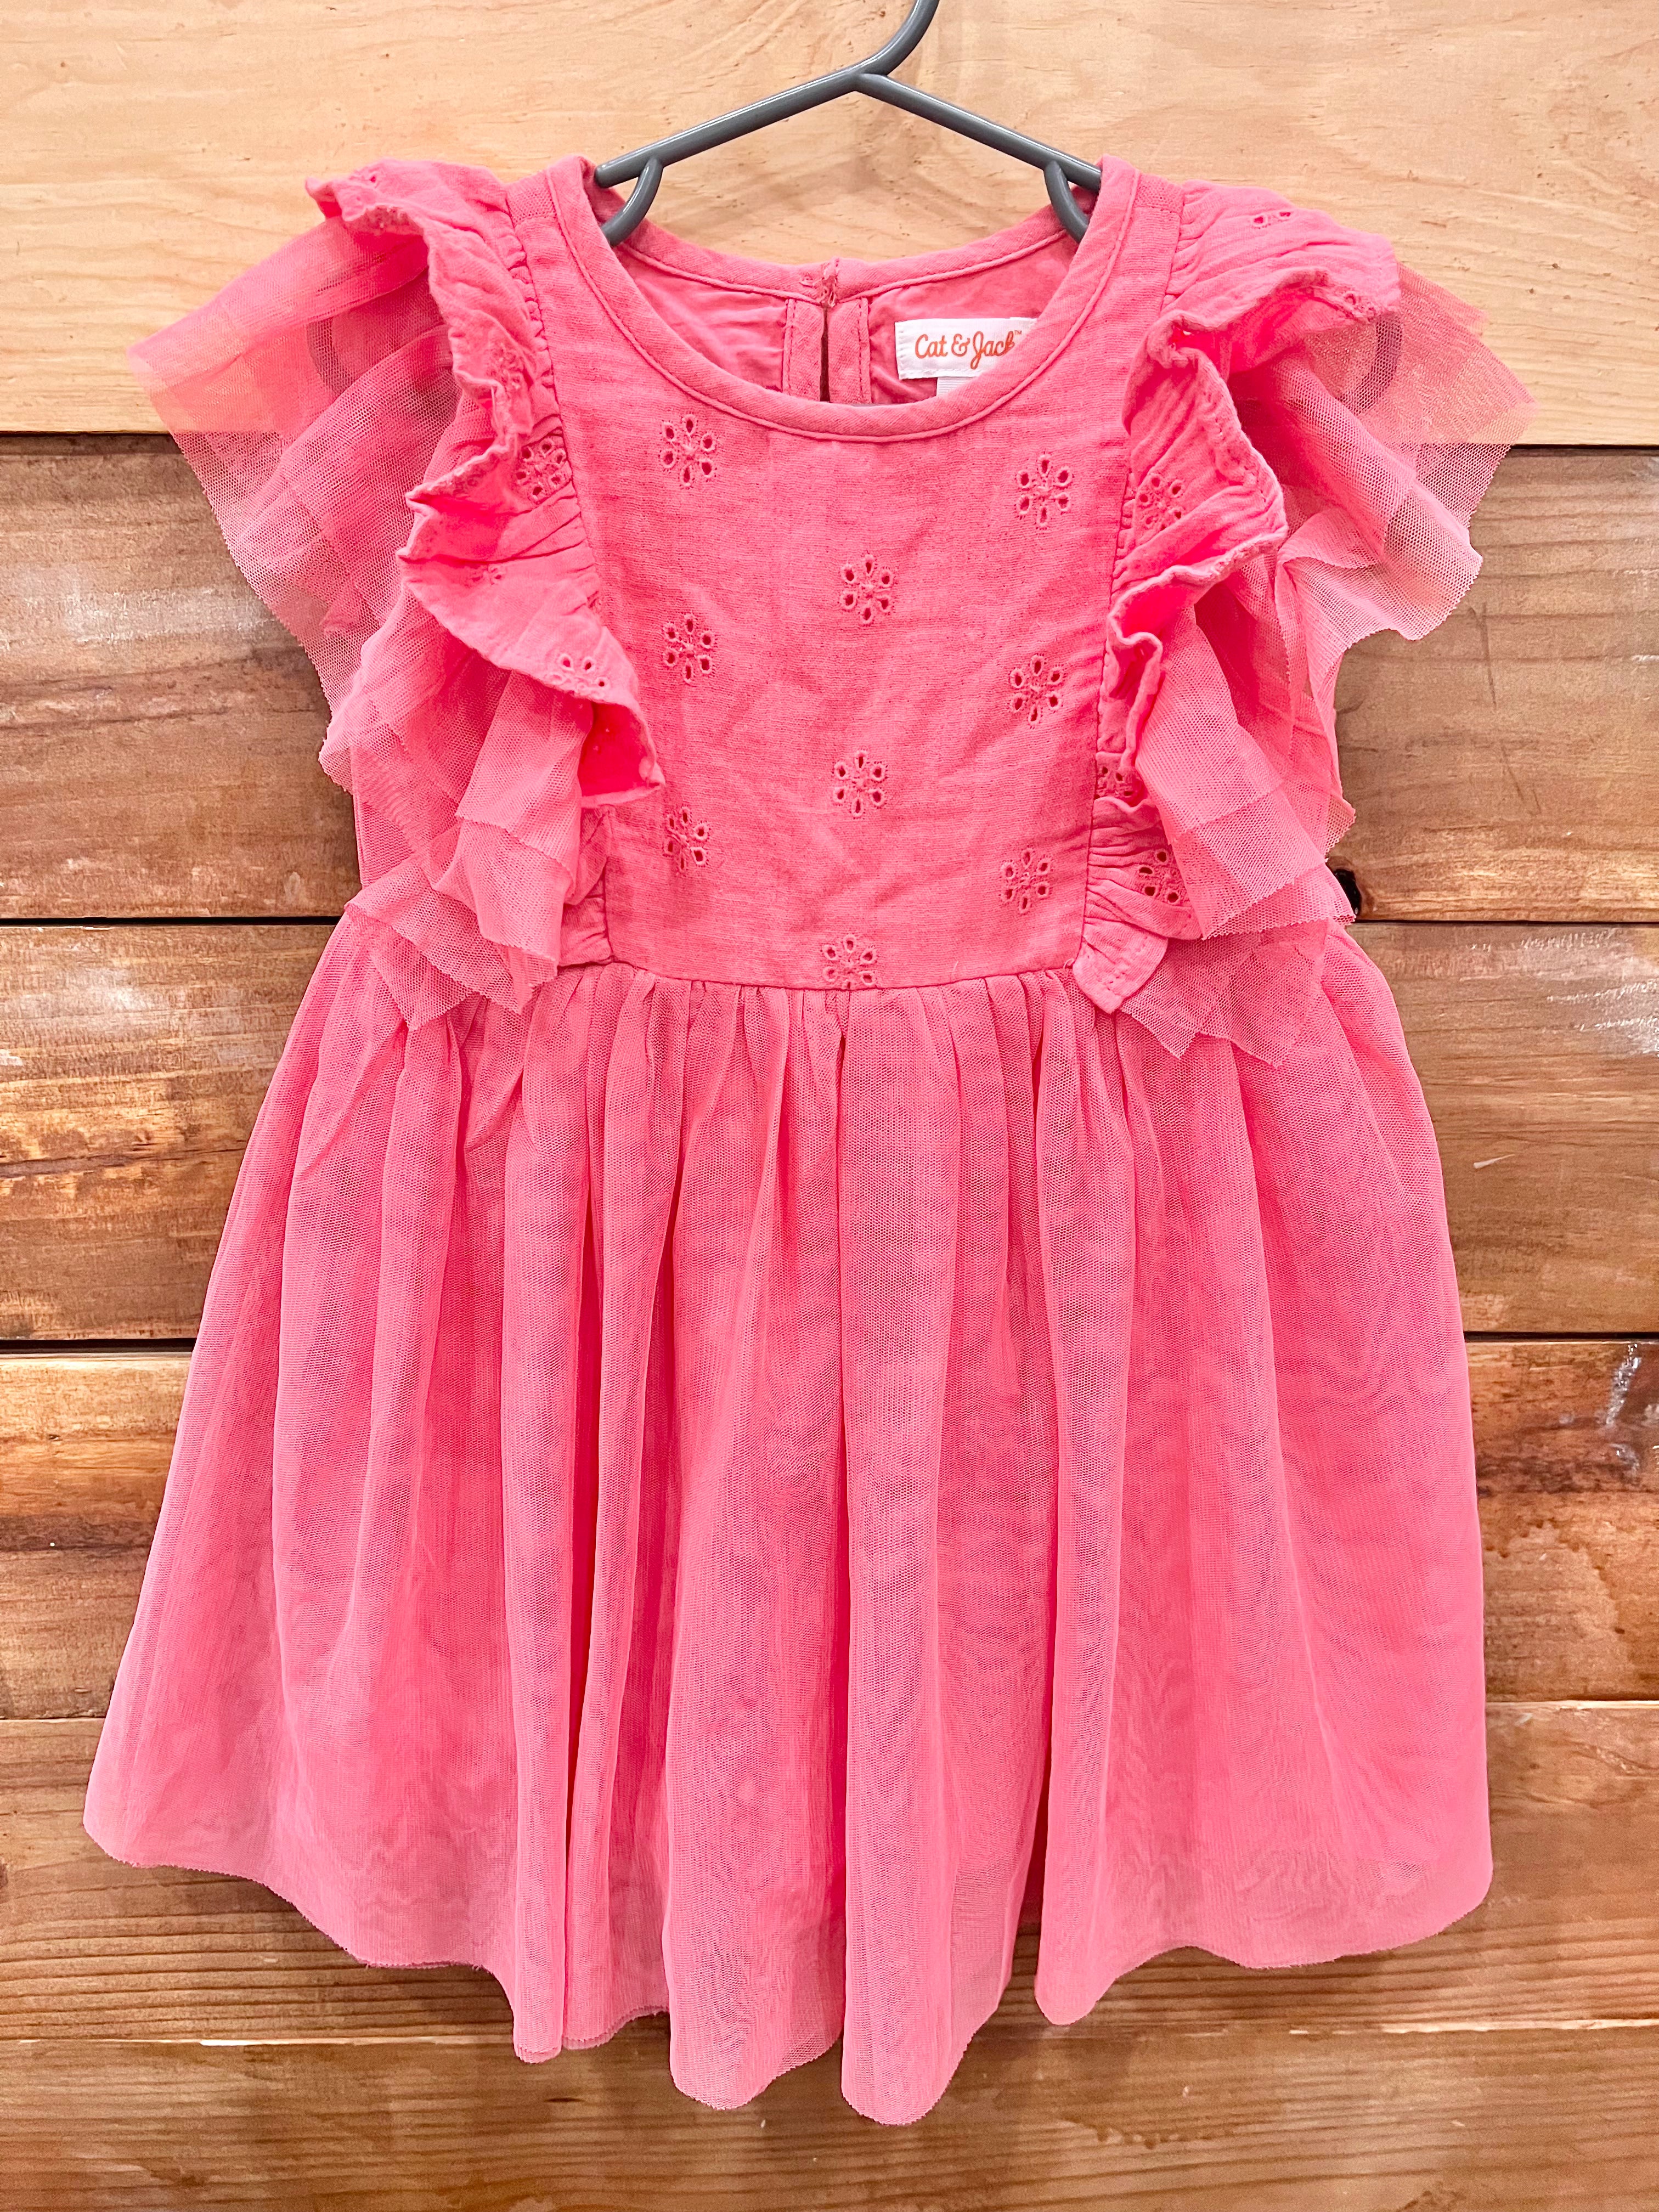 Cat & Jack Pink Dress Size 3T – Three Little Peas Children's